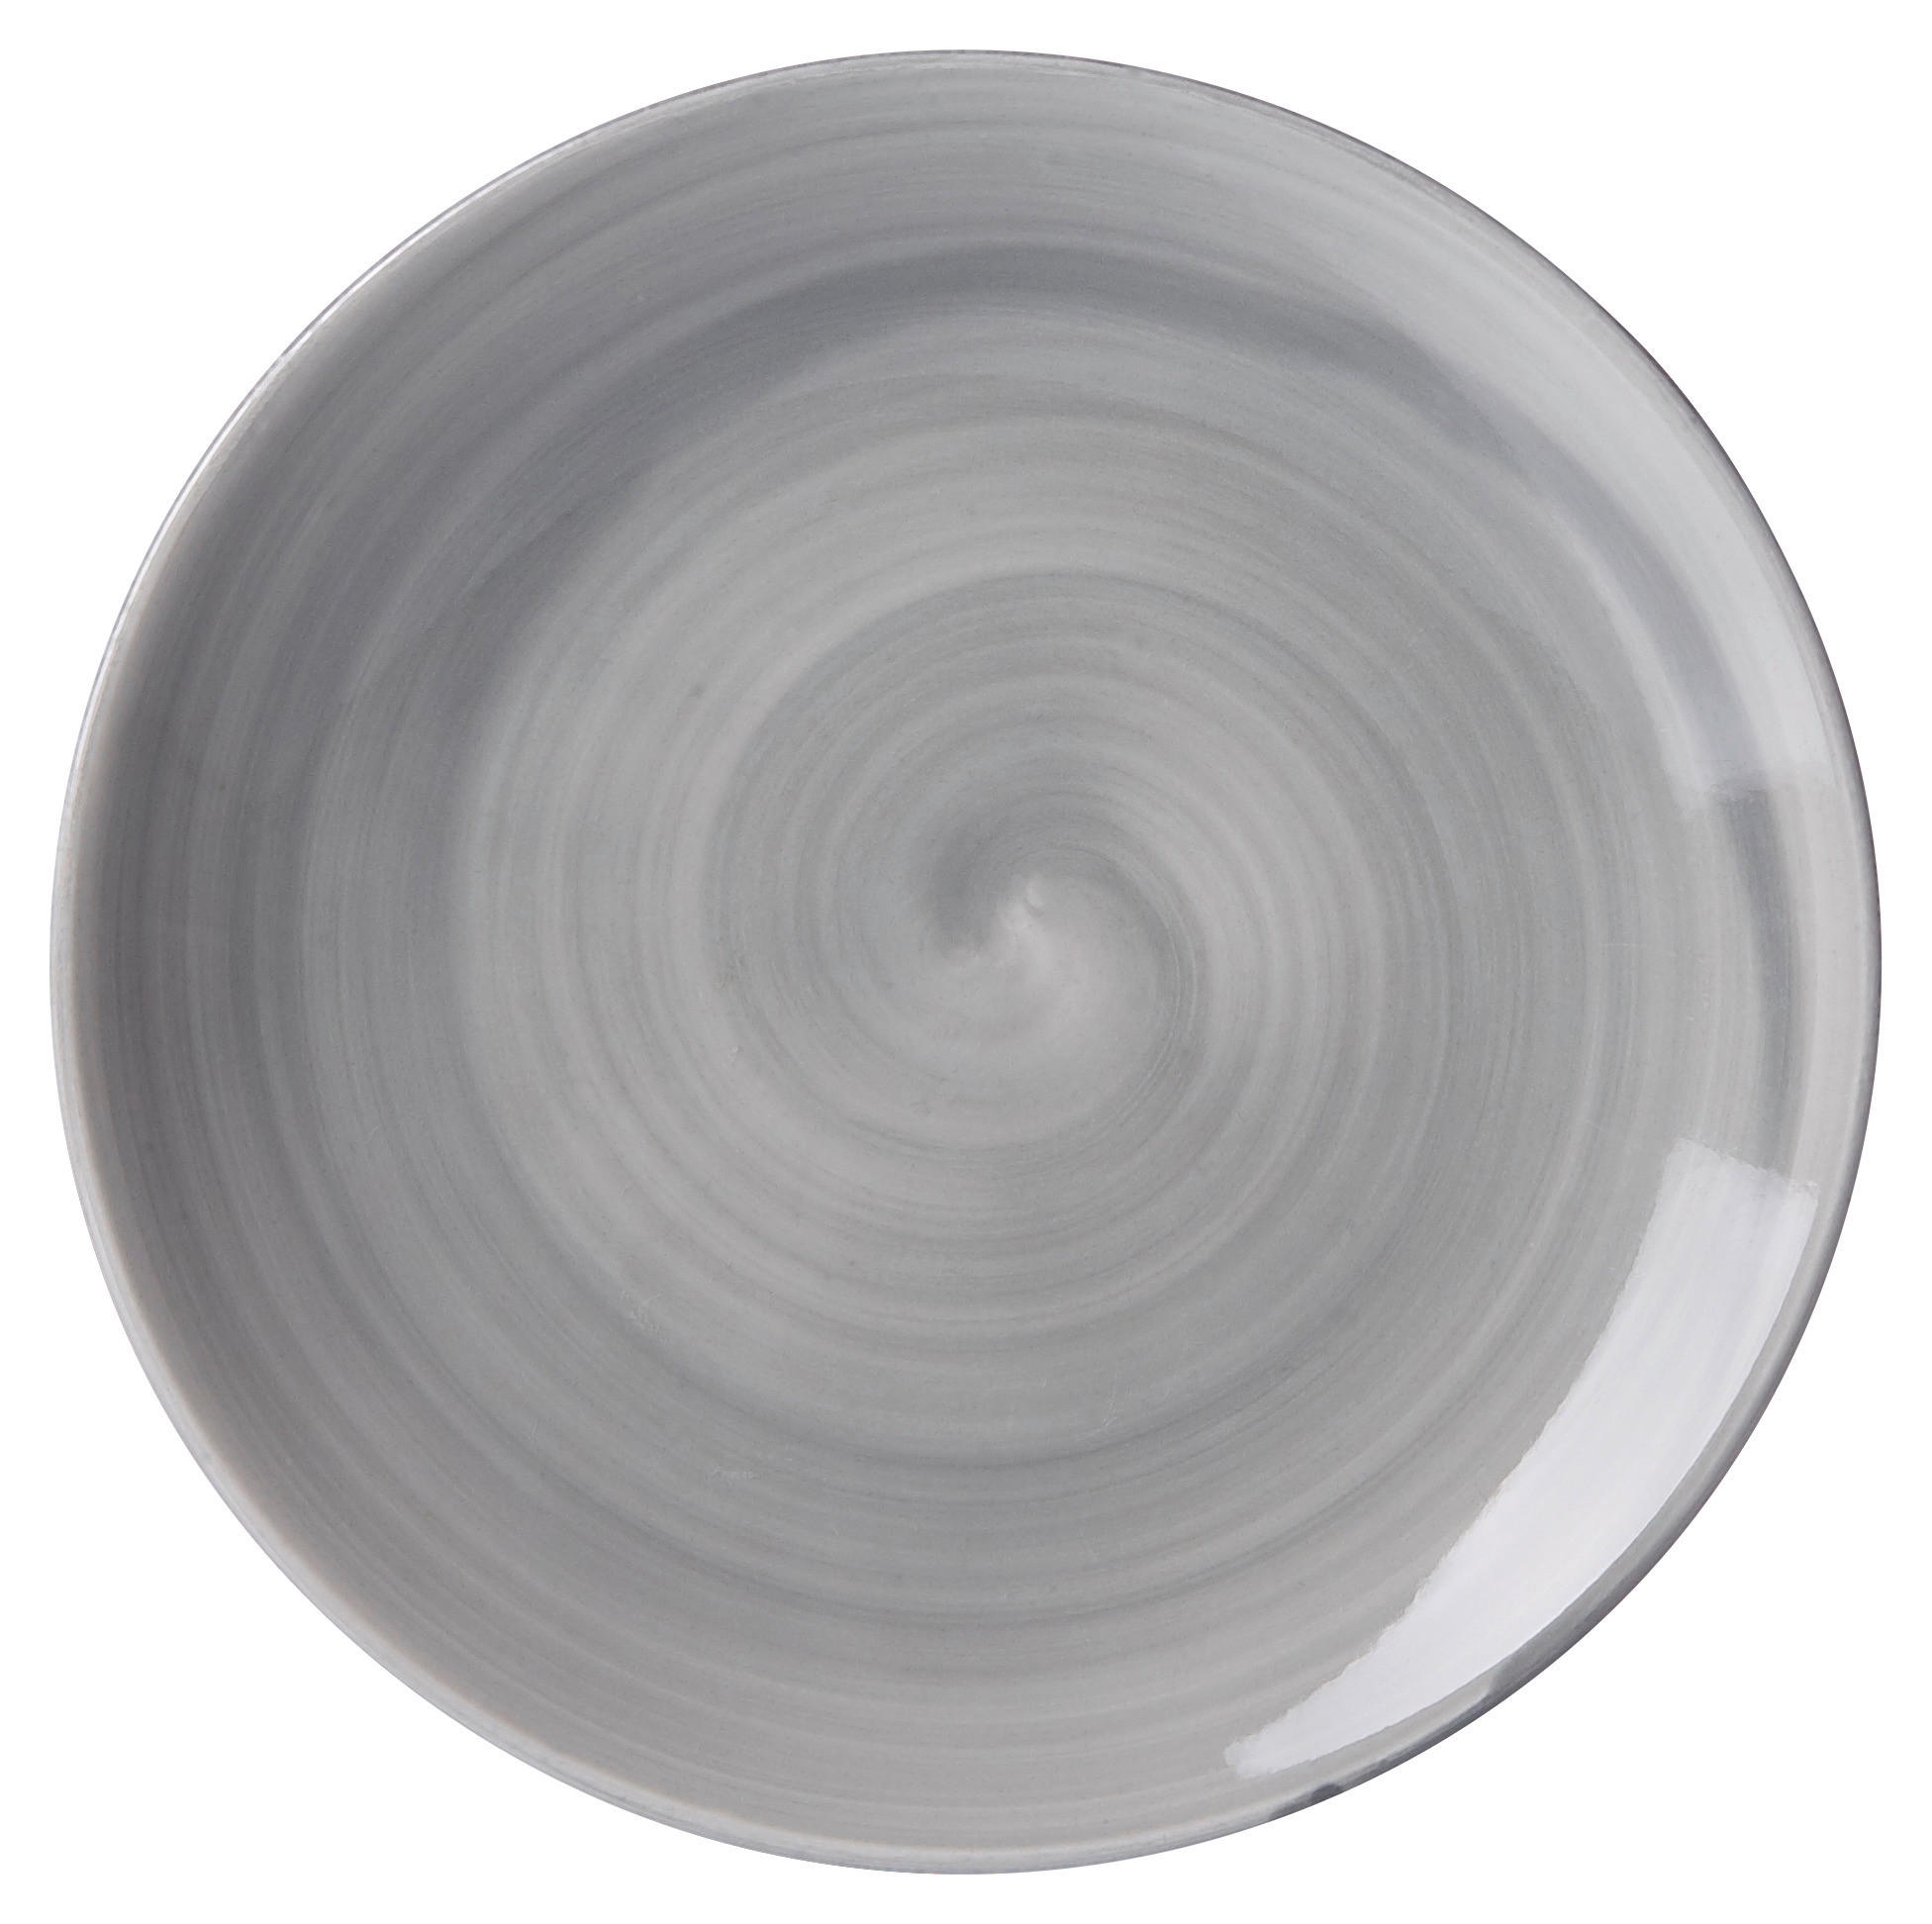 APERITIFTELLER Valencia 15 cm  - Grau, KONVENTIONELL, Keramik (15cm) - Ritzenhoff Breker